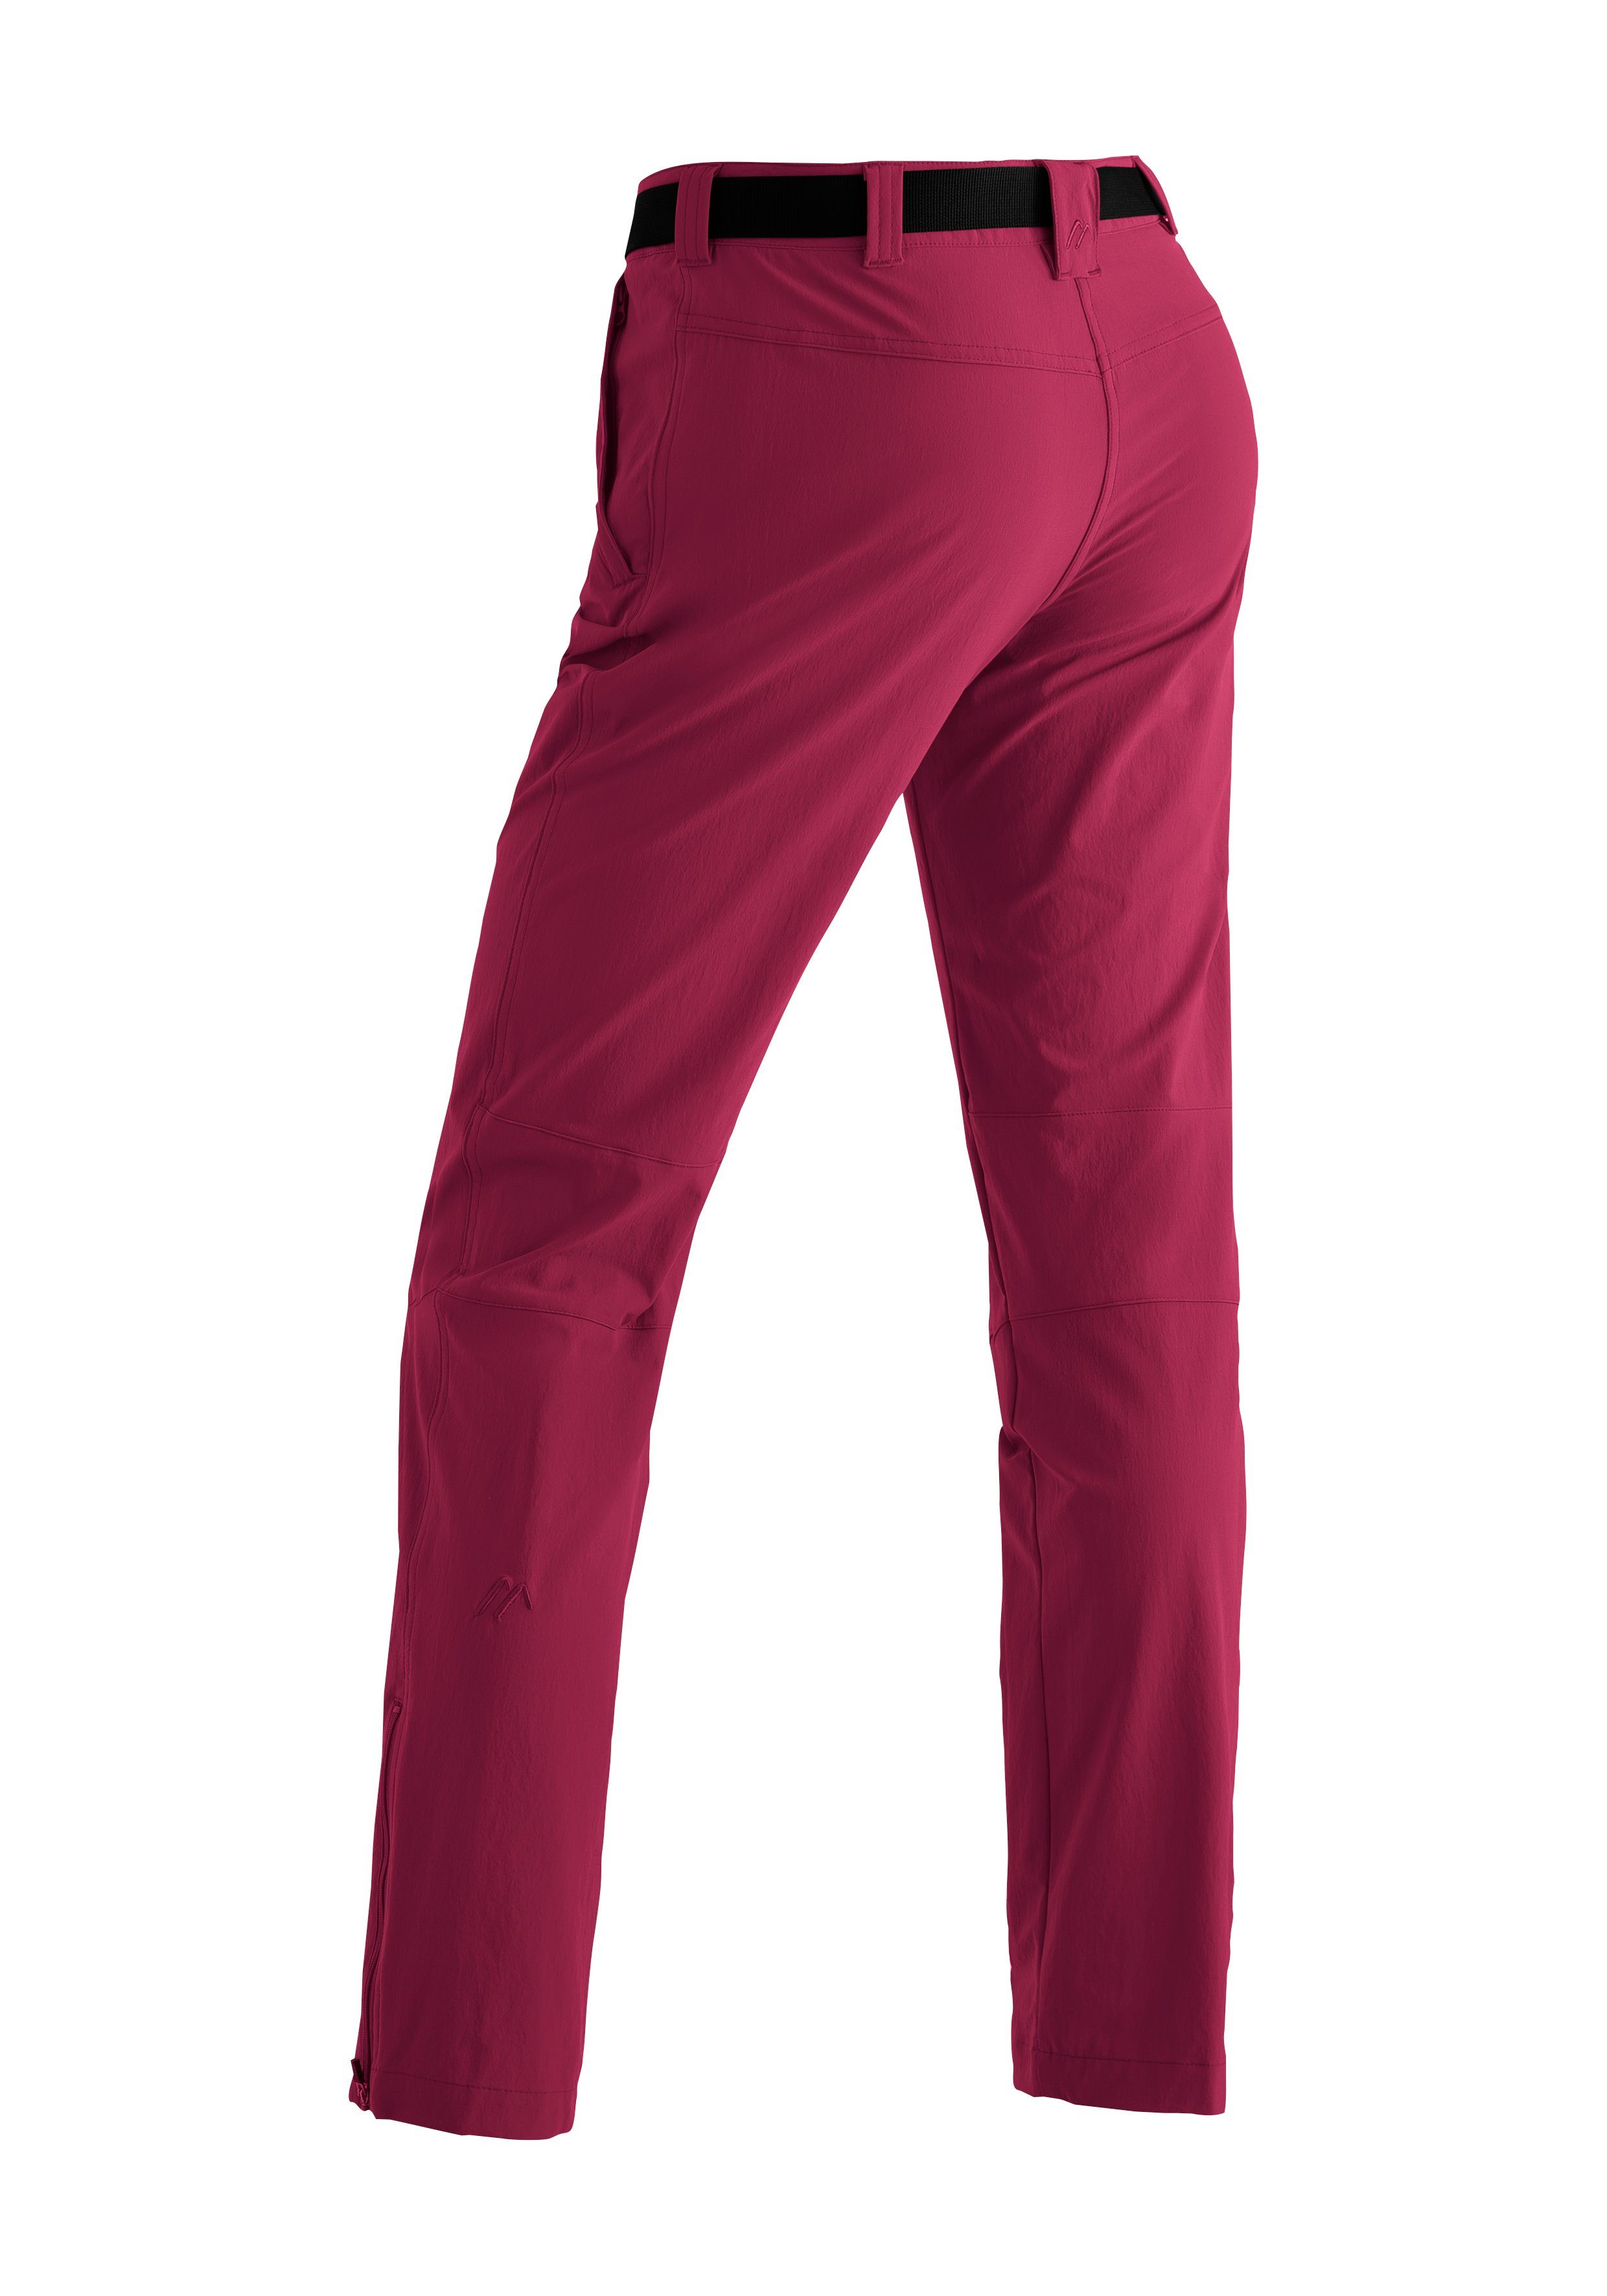 Wanderhose, elastischem Maier aus Outdoor-Hose purpurrot Damen Inara Funktionshose Sports Material slim